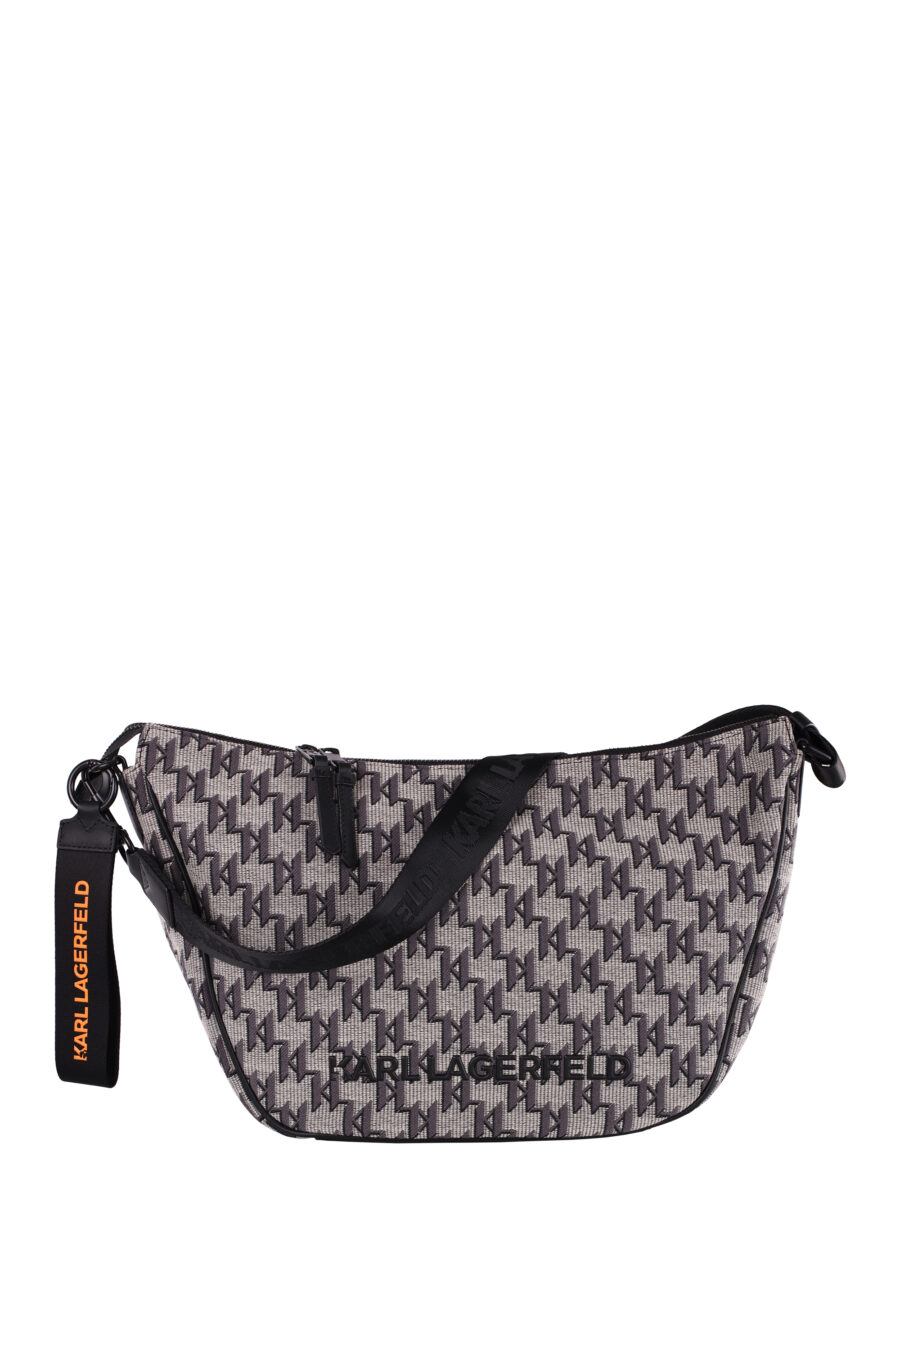 Hobo style shoulder bag with monogrammed logo - IMG 6052